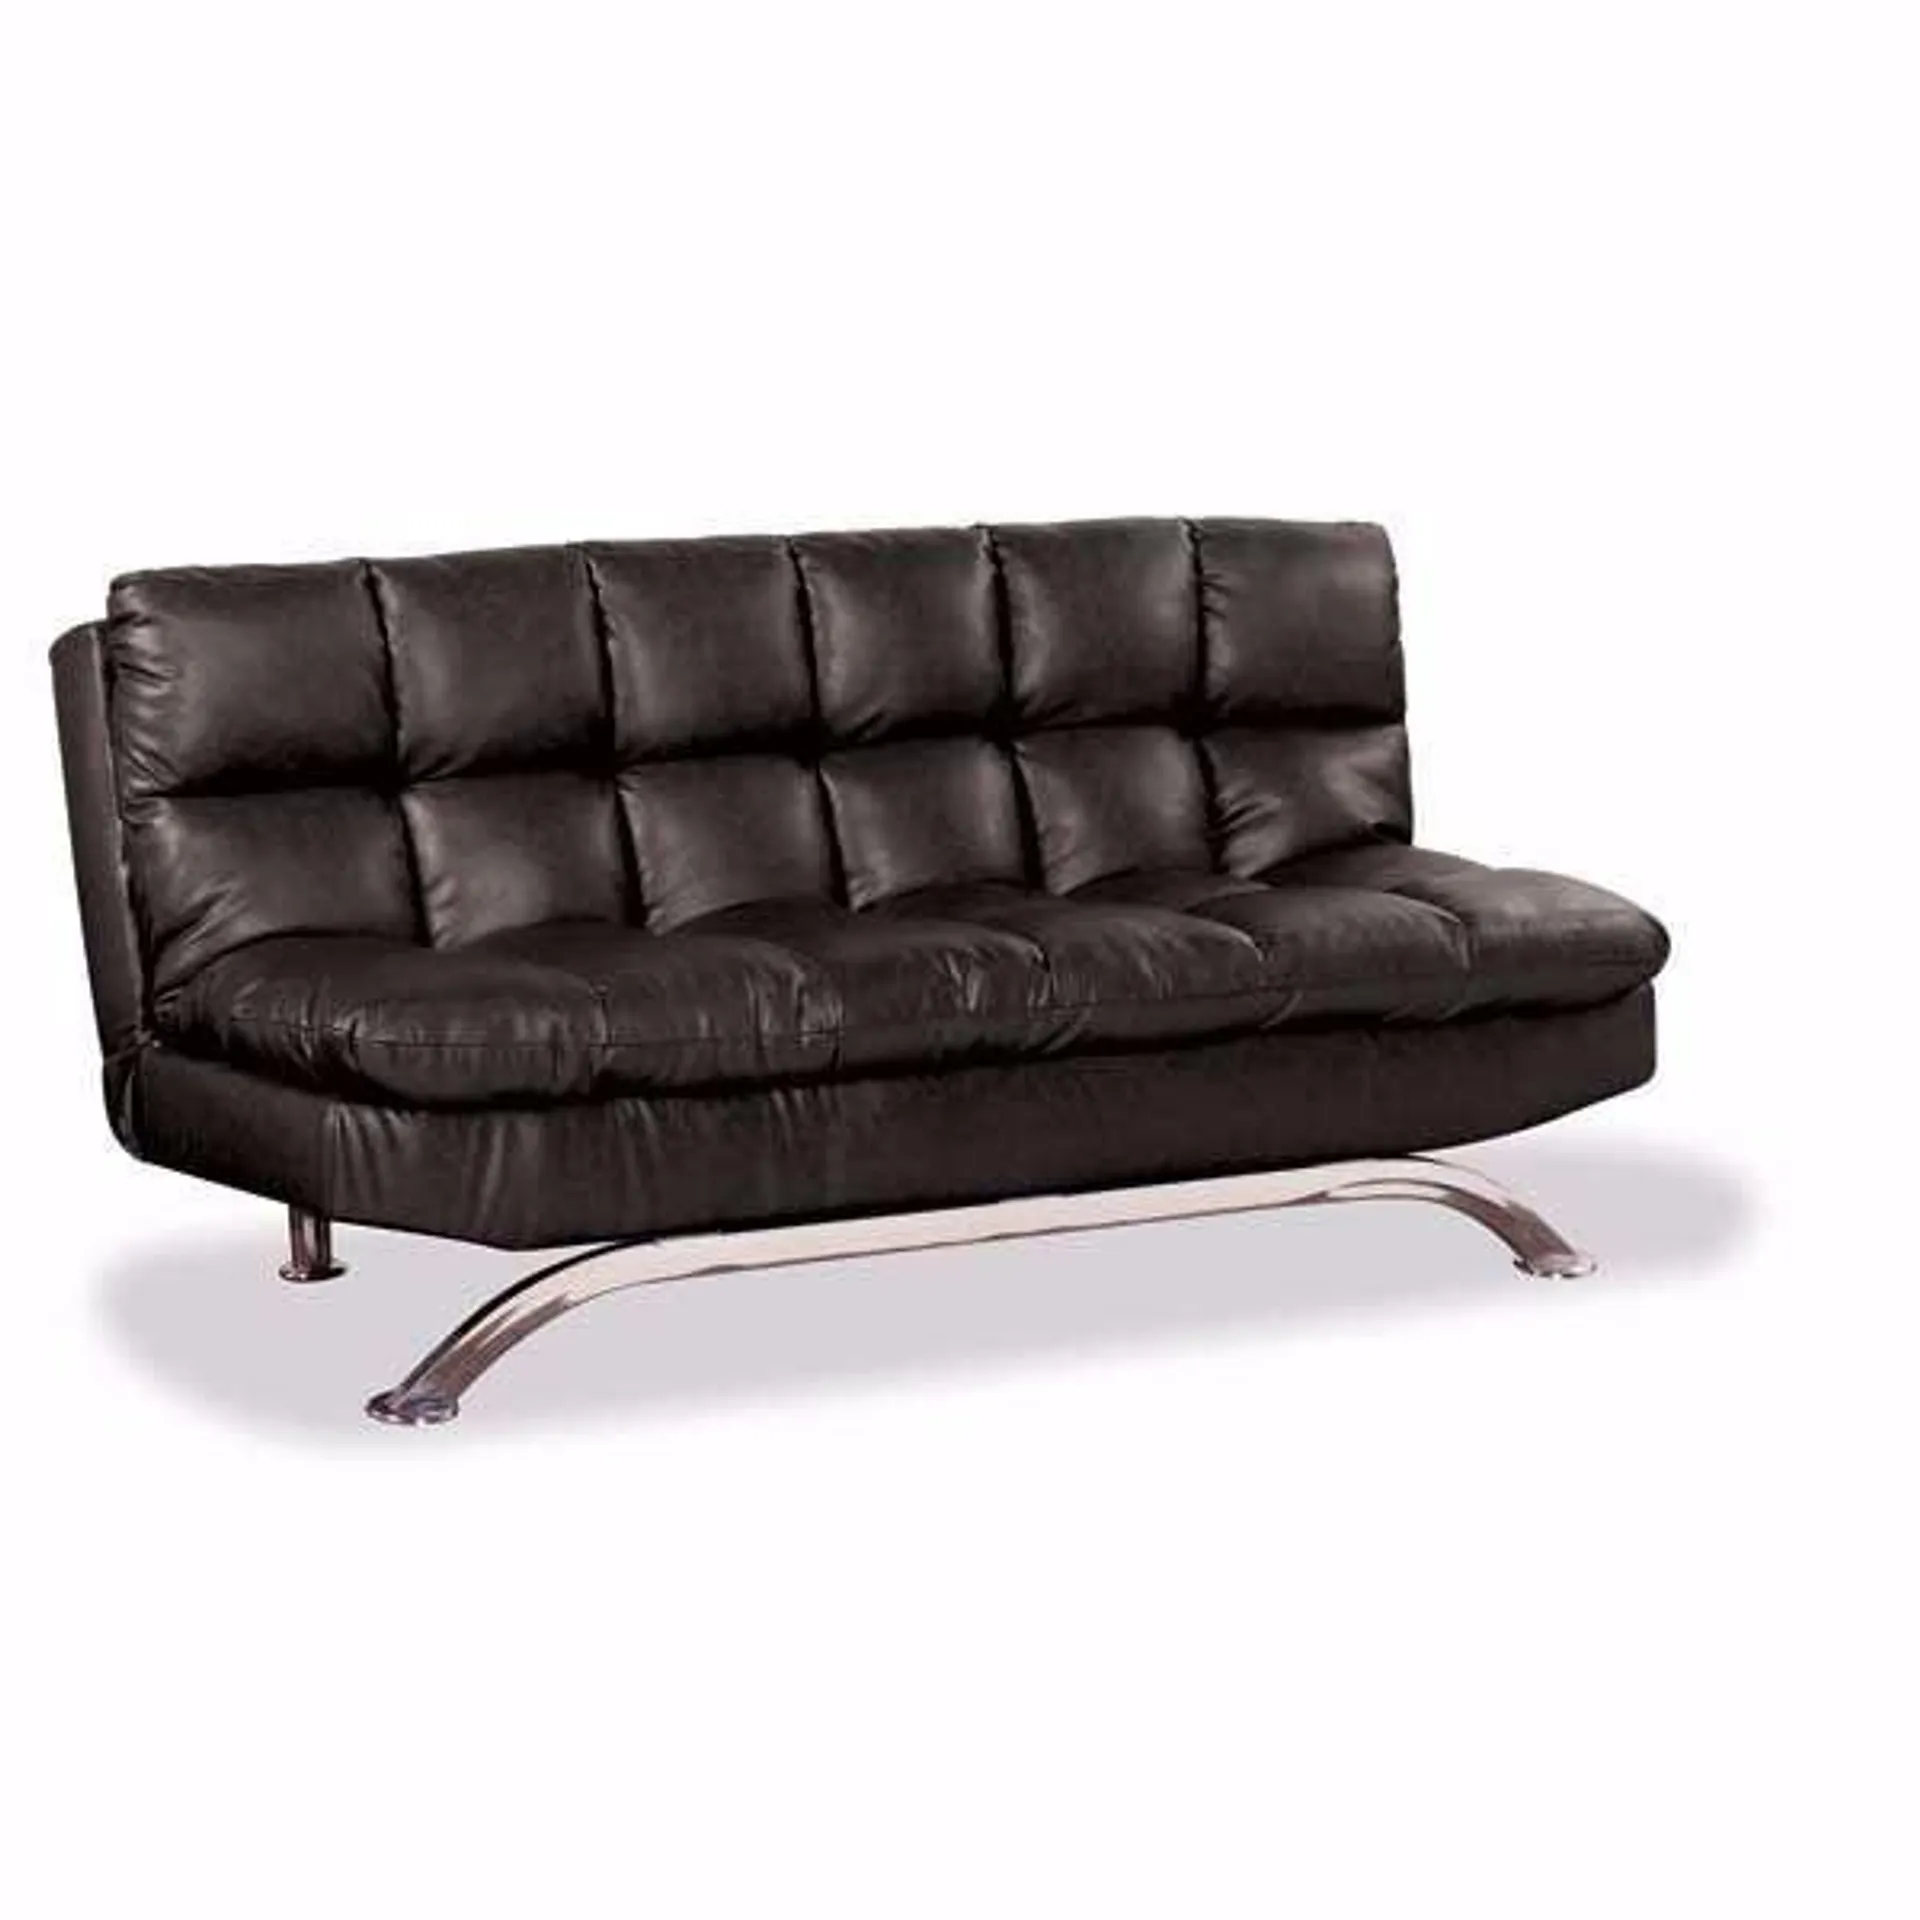 Mayfill Converta Sofa in Black